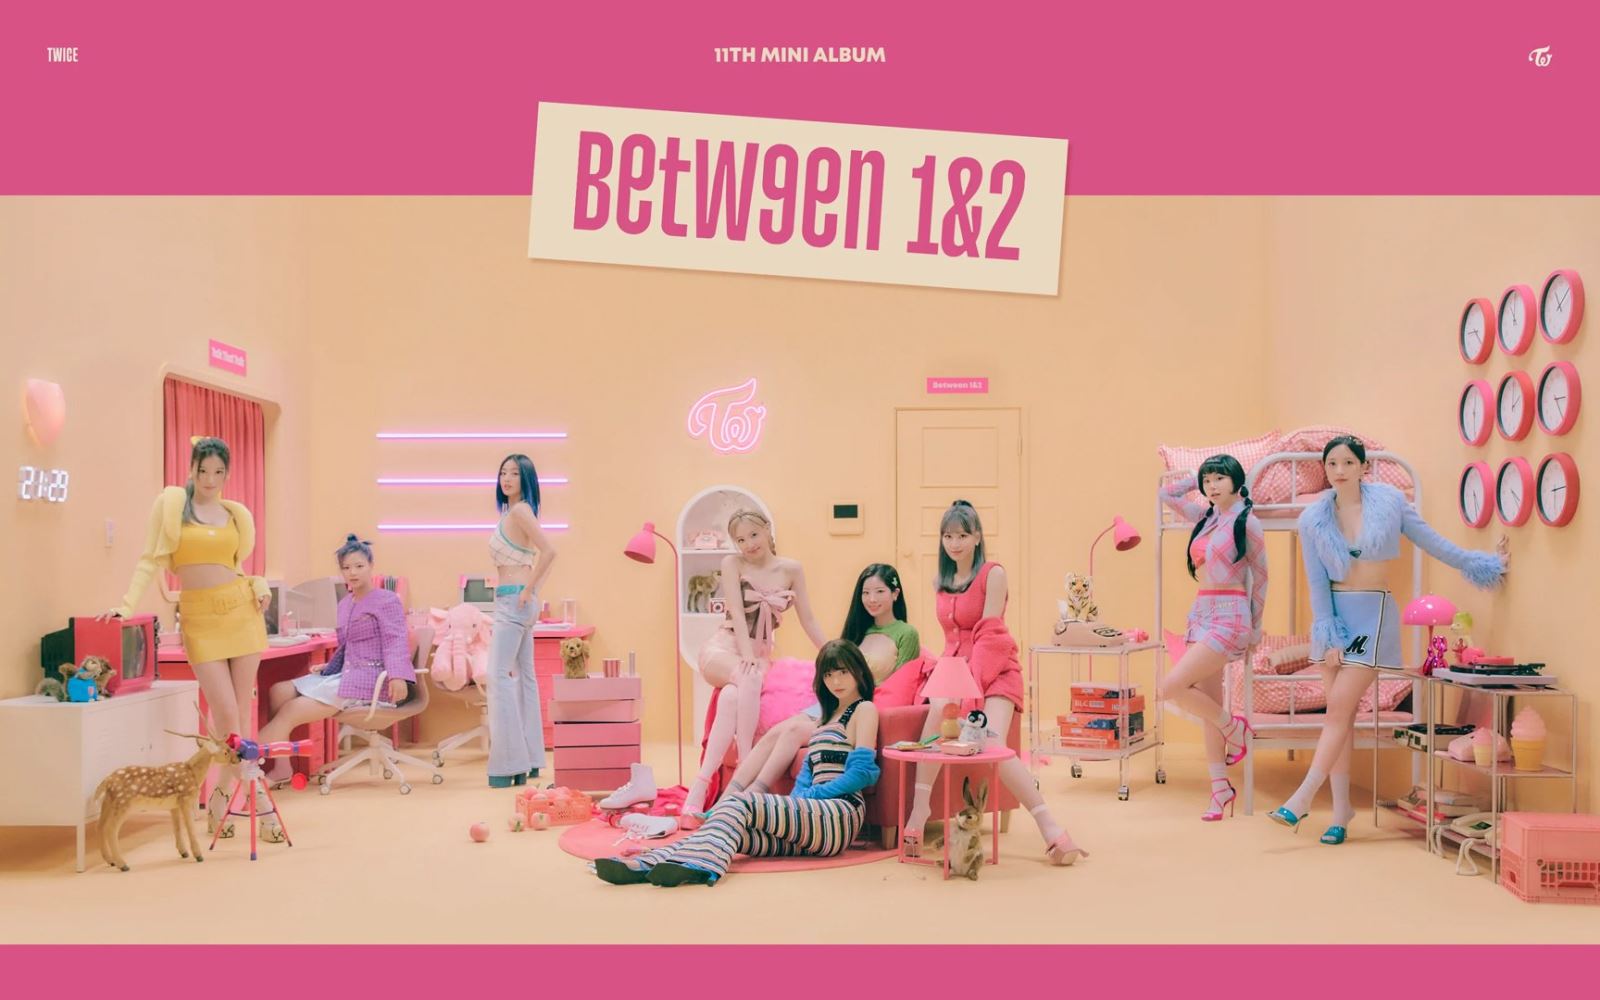 Twice, Twice ảnh như tạp chí 19+, Twice ăn mặc hở hang, Twice sexy, Between 1&2, Twice photo 2022, Between 1&2 photo concept, Jihyo, Nayeon, Jeongyeon, Momo, Sana, Mina